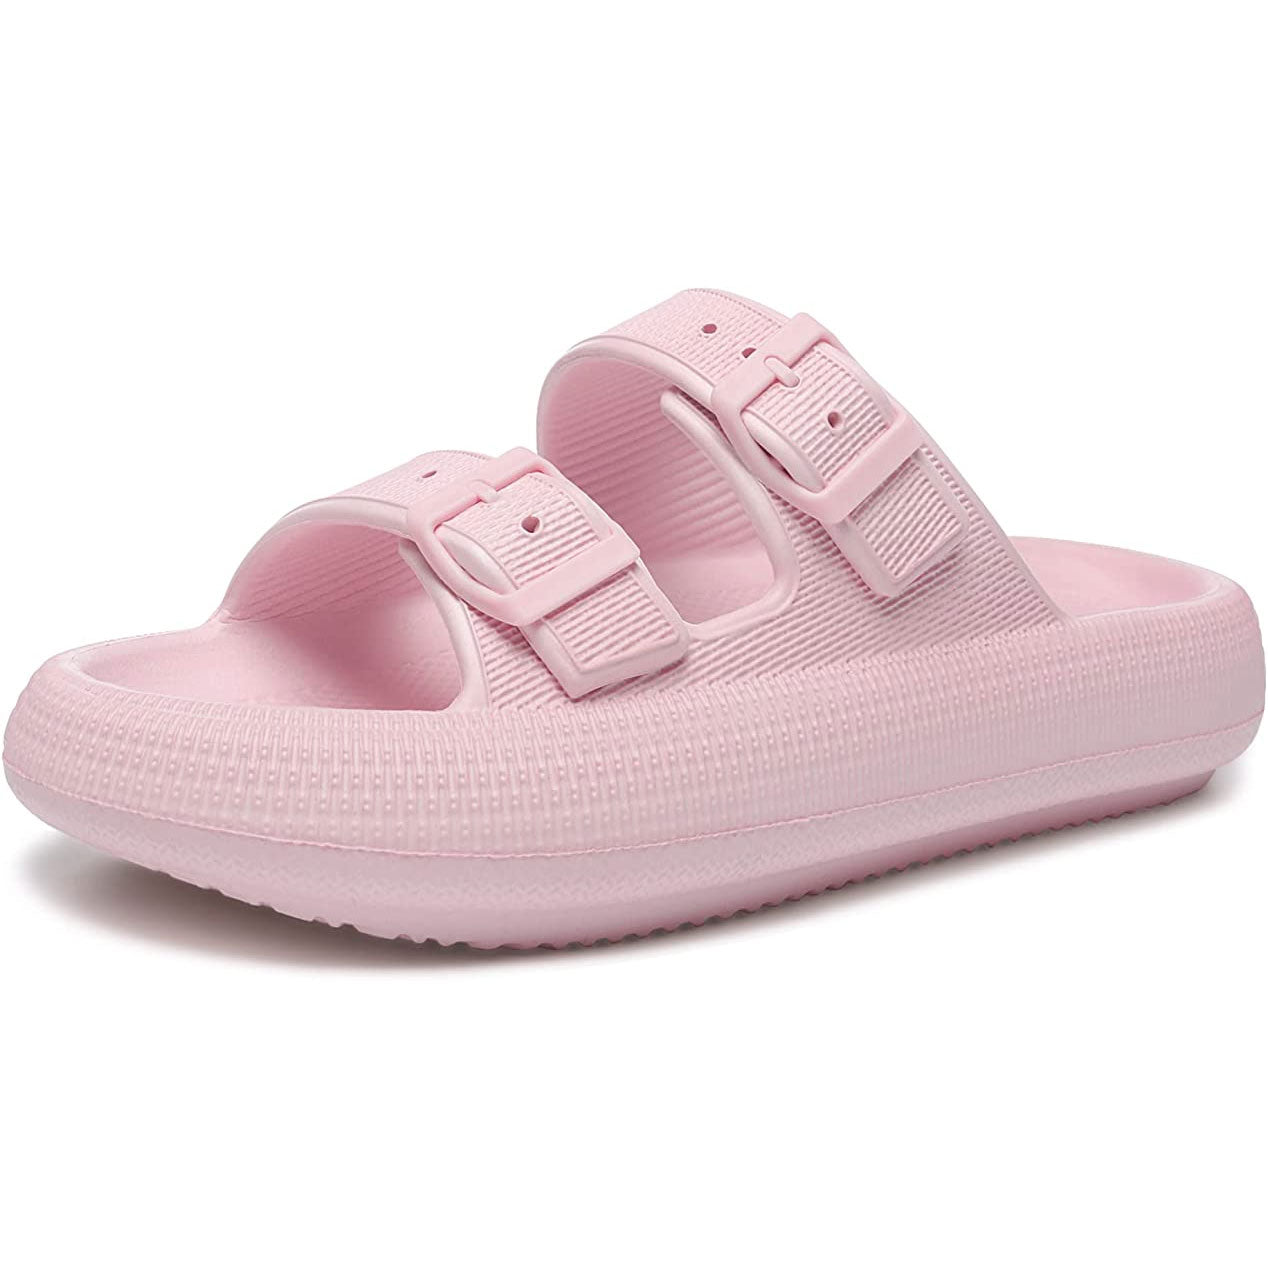 Hengde Slide Sandals Woman's Flip Flops Chevron Blue or Pink Size 6.5, 7,  7.5, 8